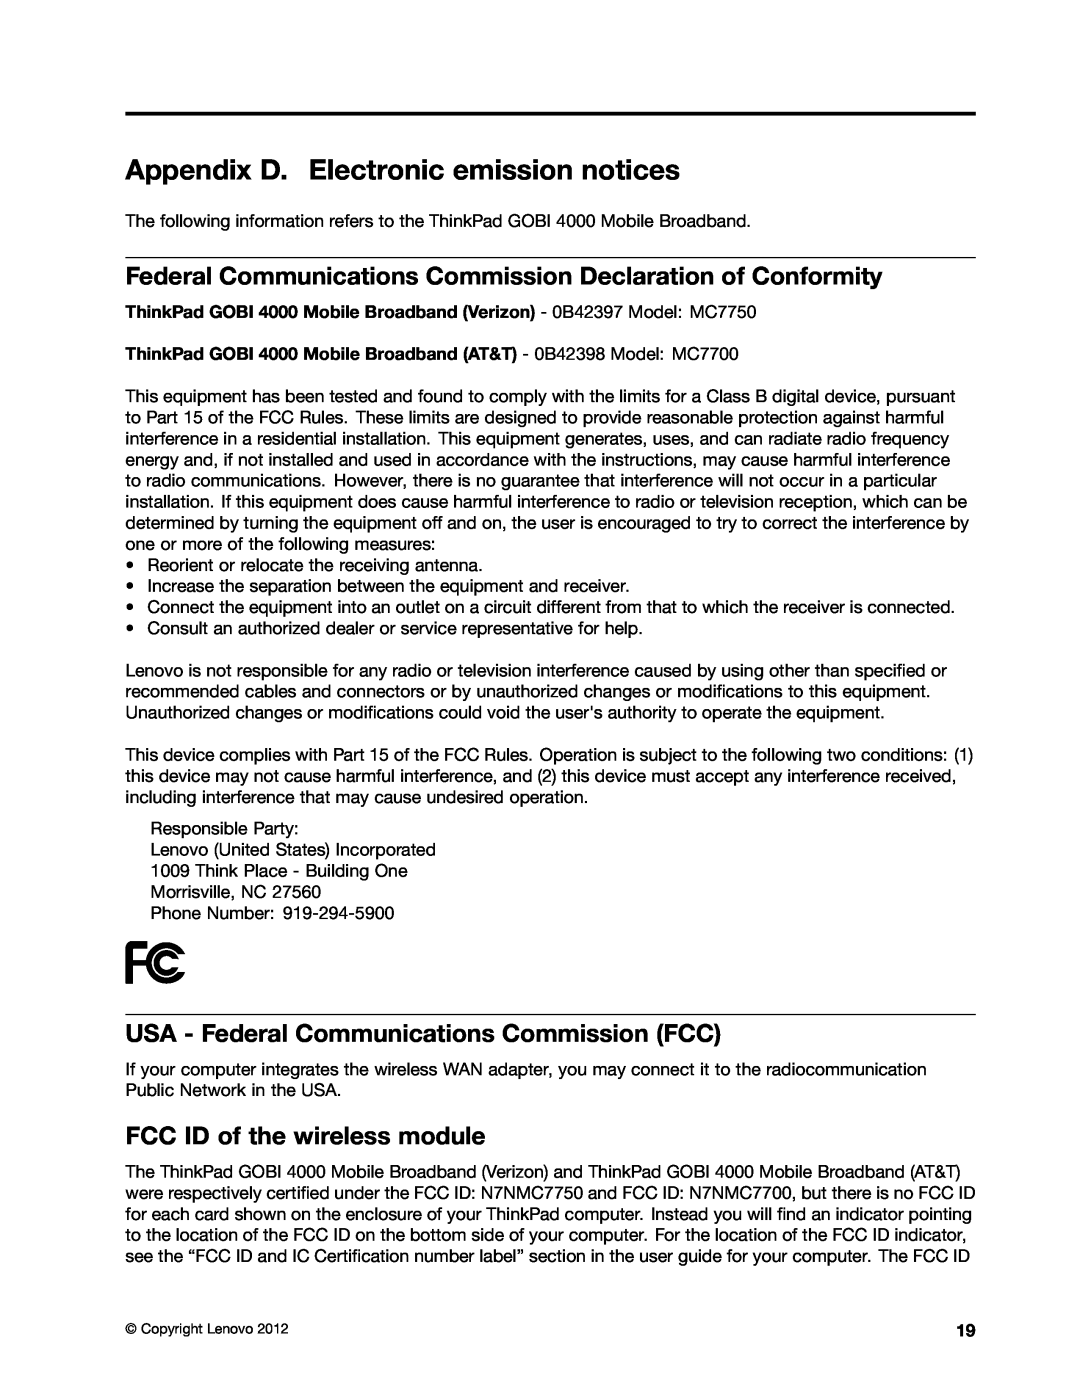 Lenovo GOBI 4000 Appendix D. Electronic emission notices, Federal Communications Commission Declaration of Conformity 